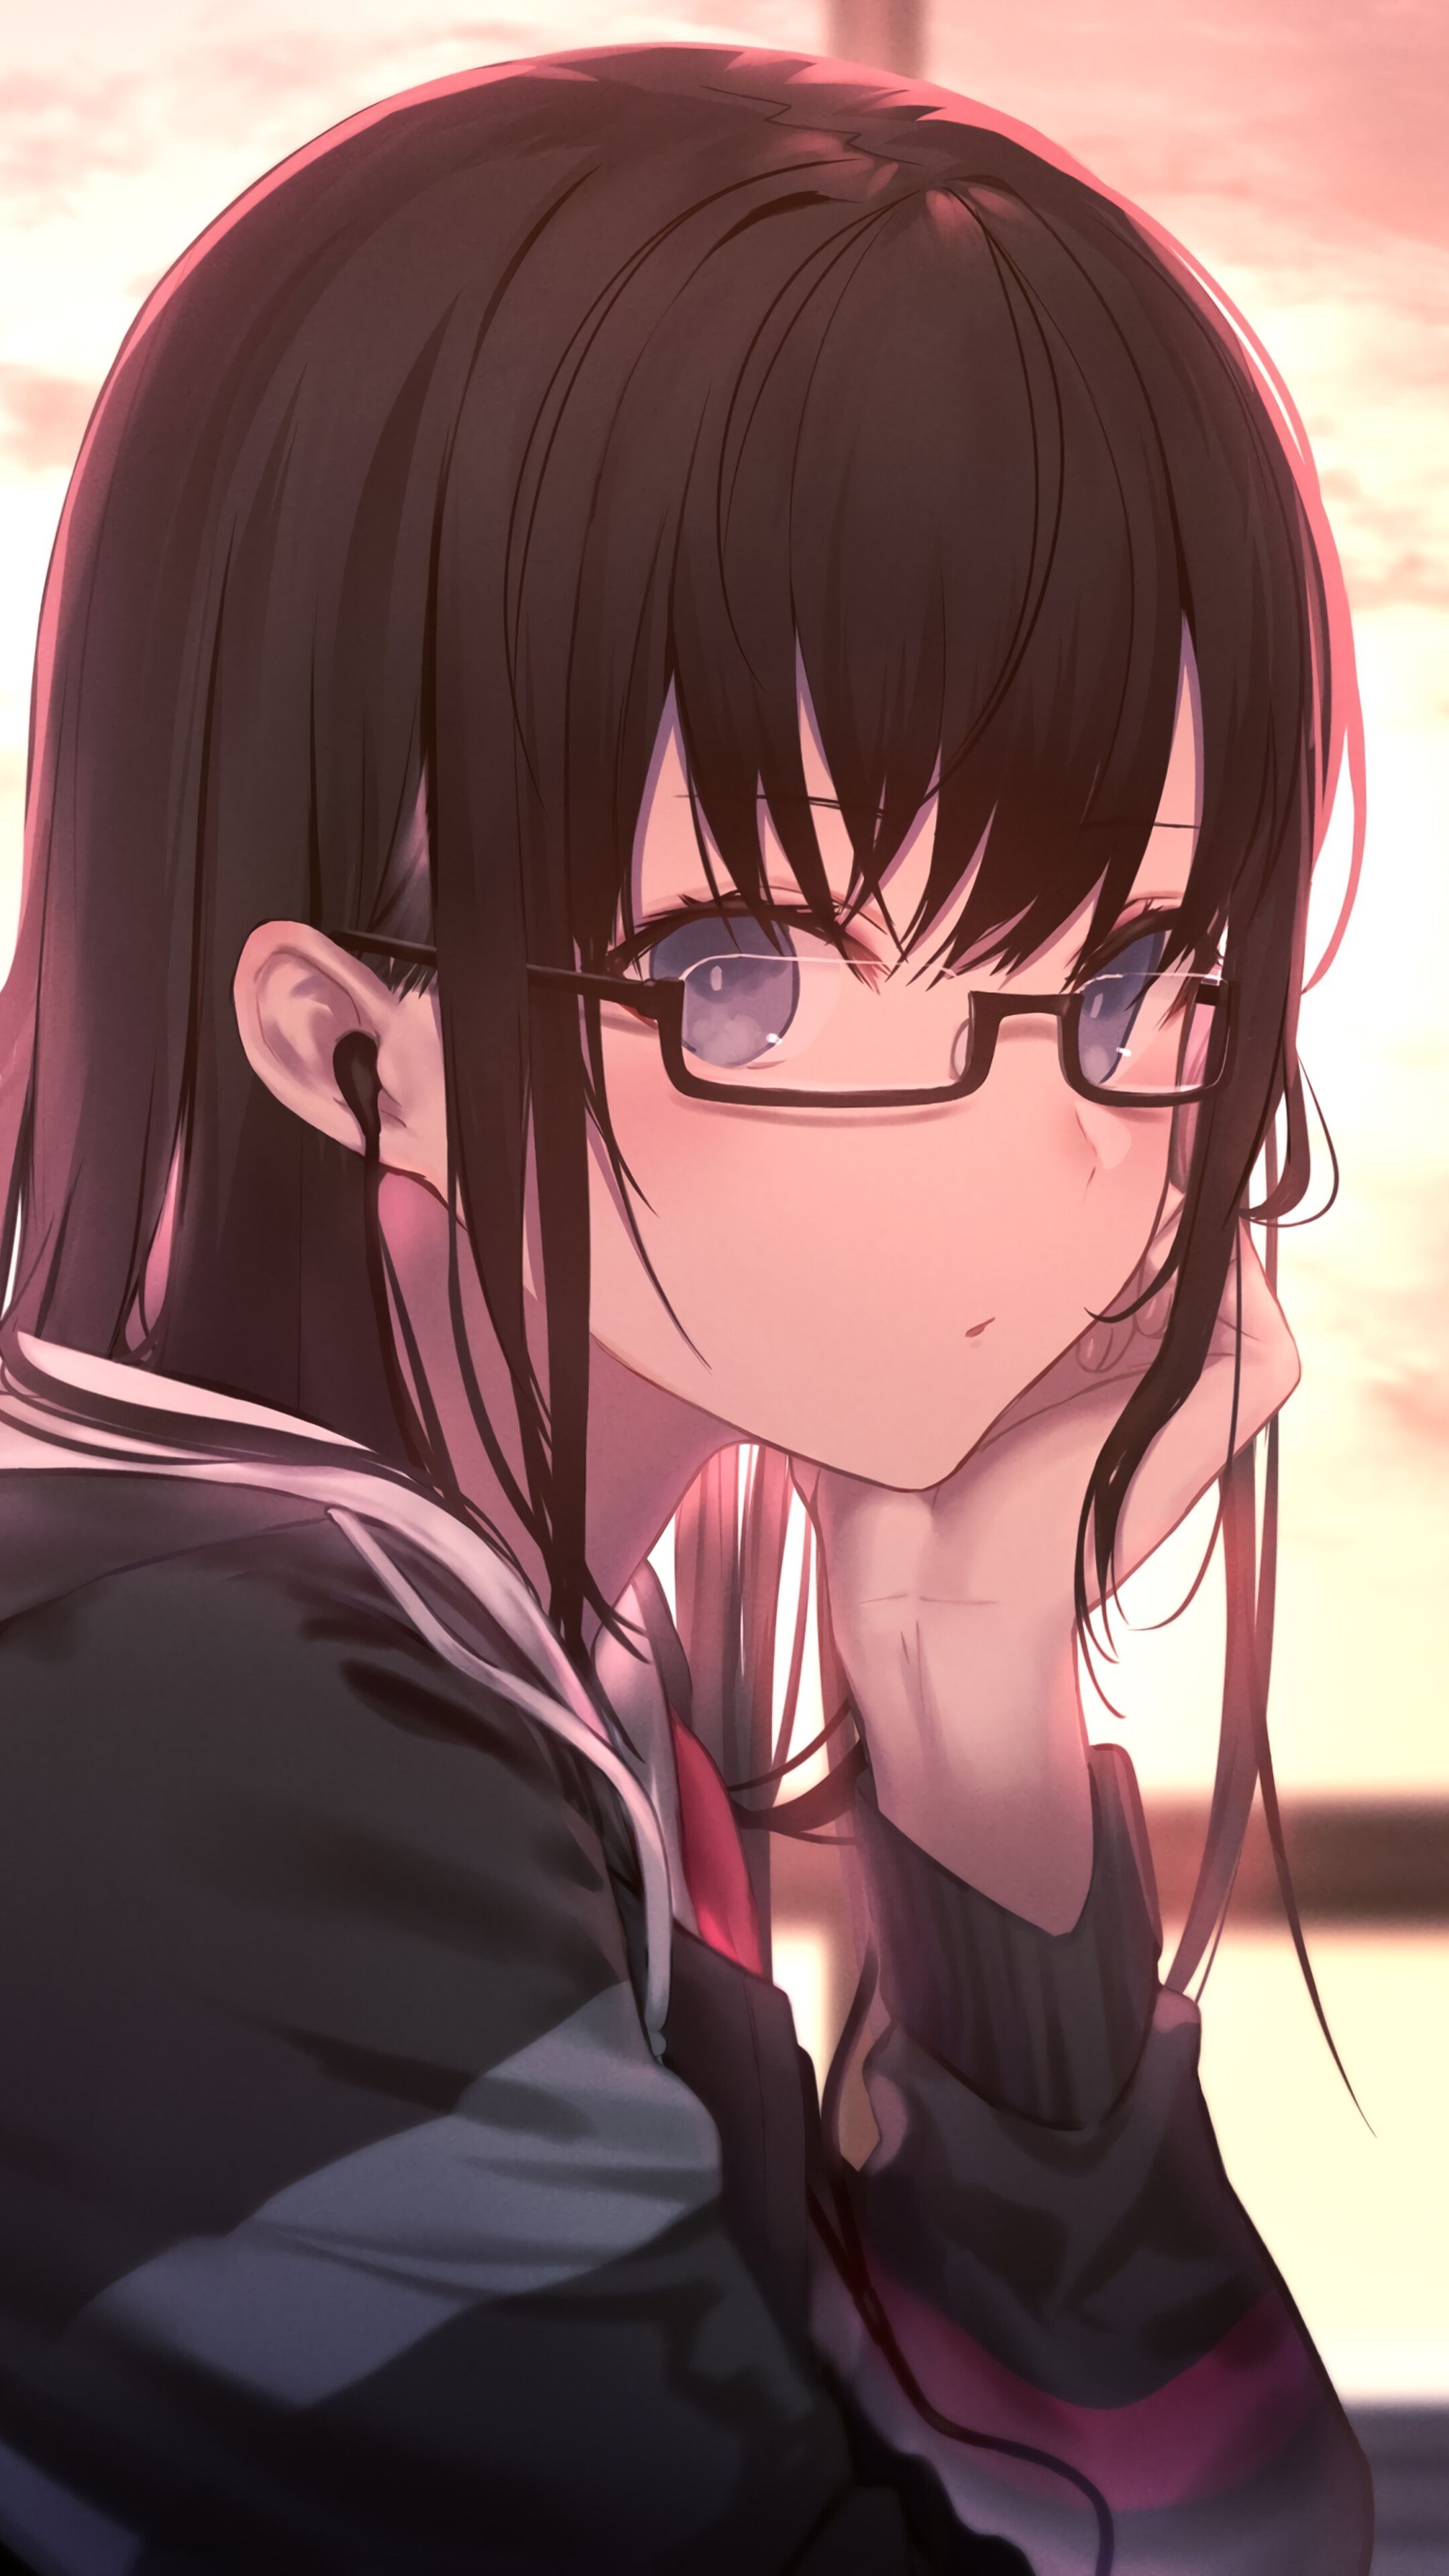 Anime Girl In Glasses Art Wallpaper Hd Anime 4k Wallp - vrogue.co